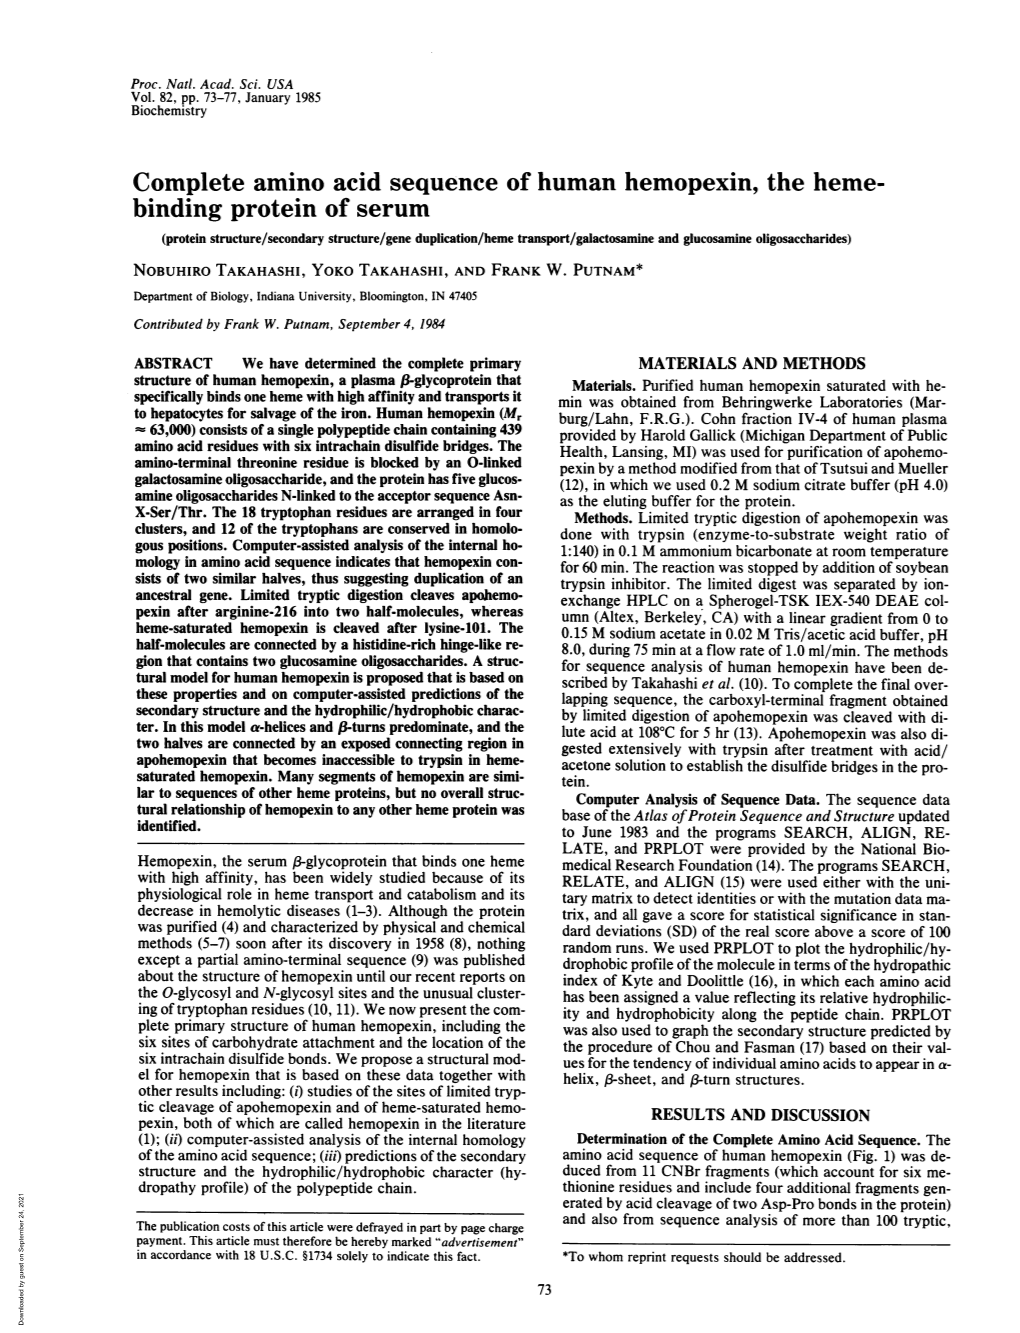 Complete Amino Acid Sequence of Human Hemopexin, the Heme